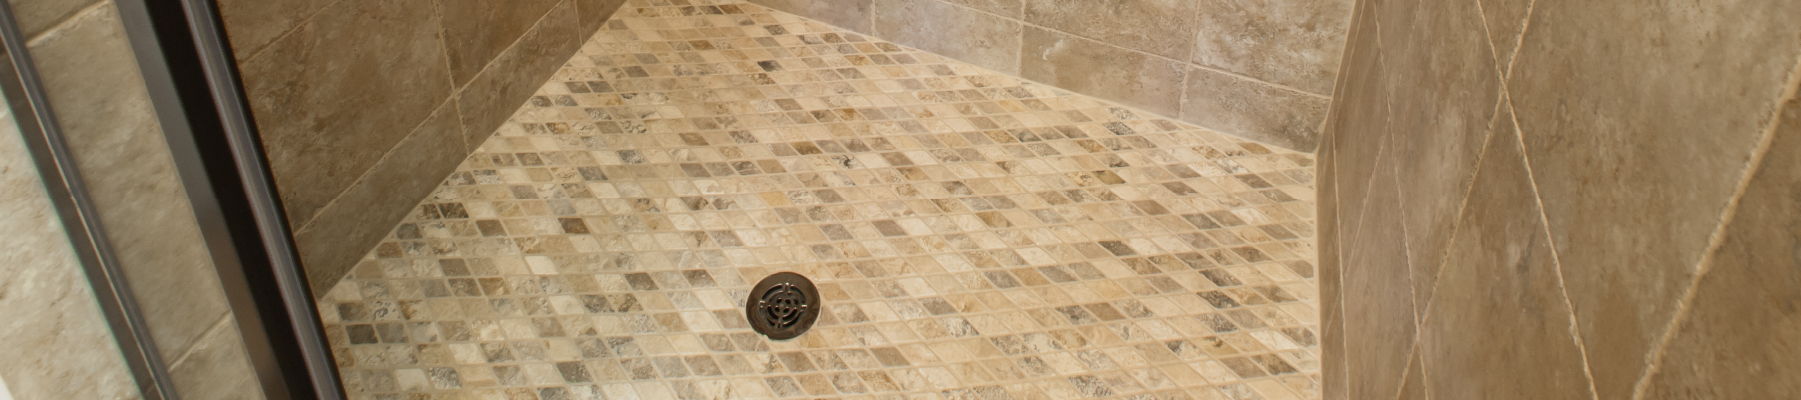 http://www.carpettech.com/wp-content/uploads/2020/09/Shower-Tile-Grout-Cleaning-1.jpg